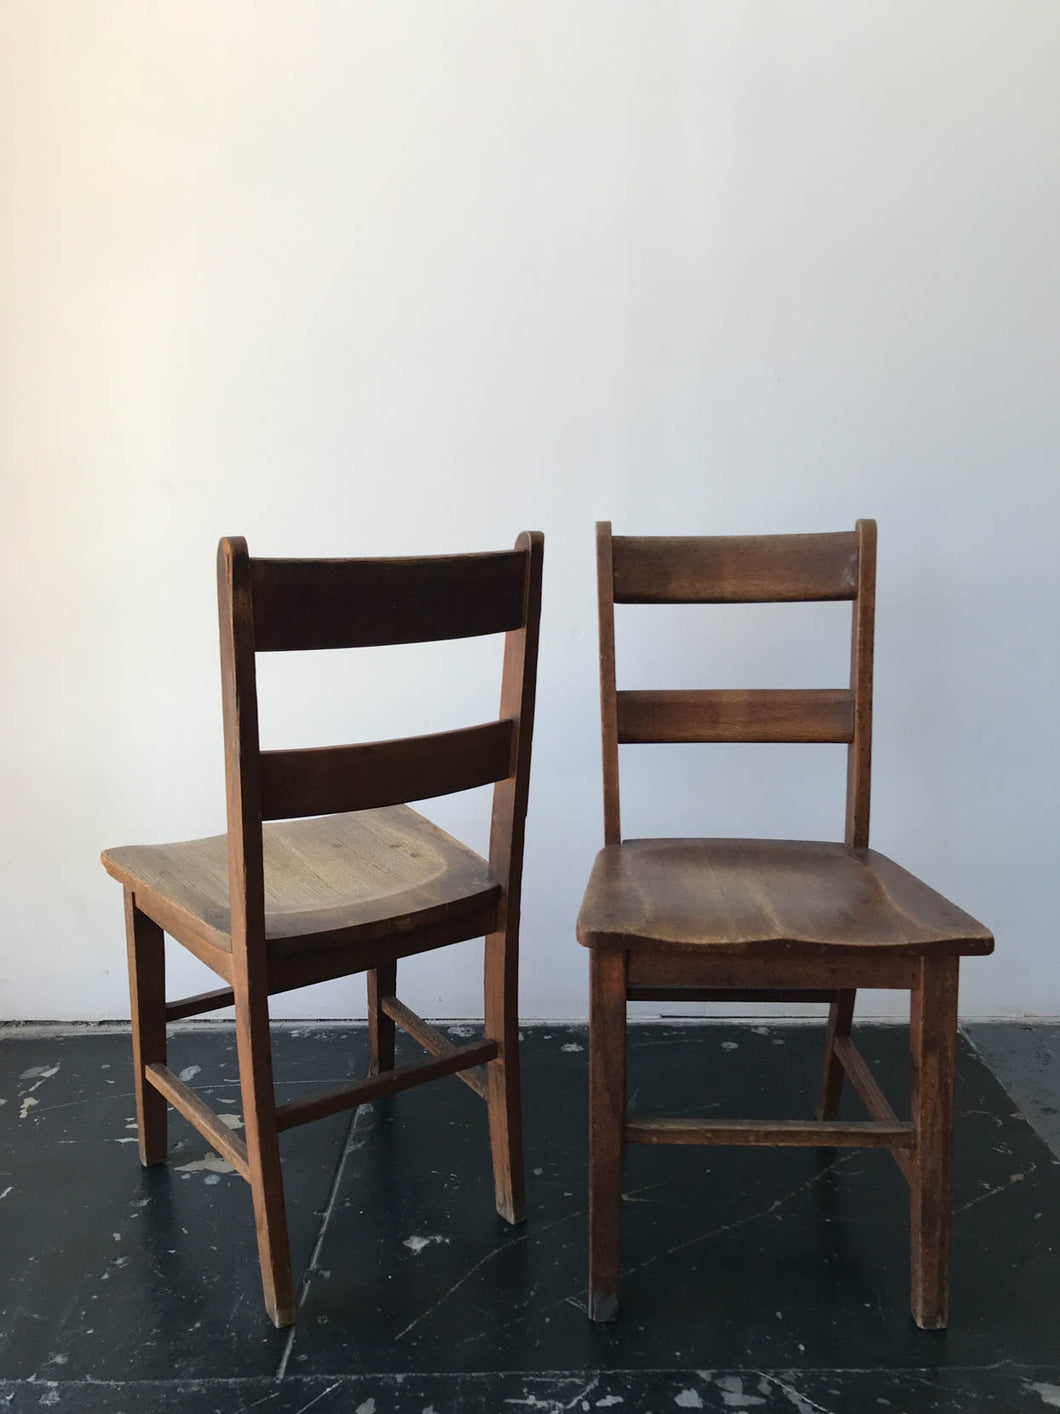 Vintage School Chairs